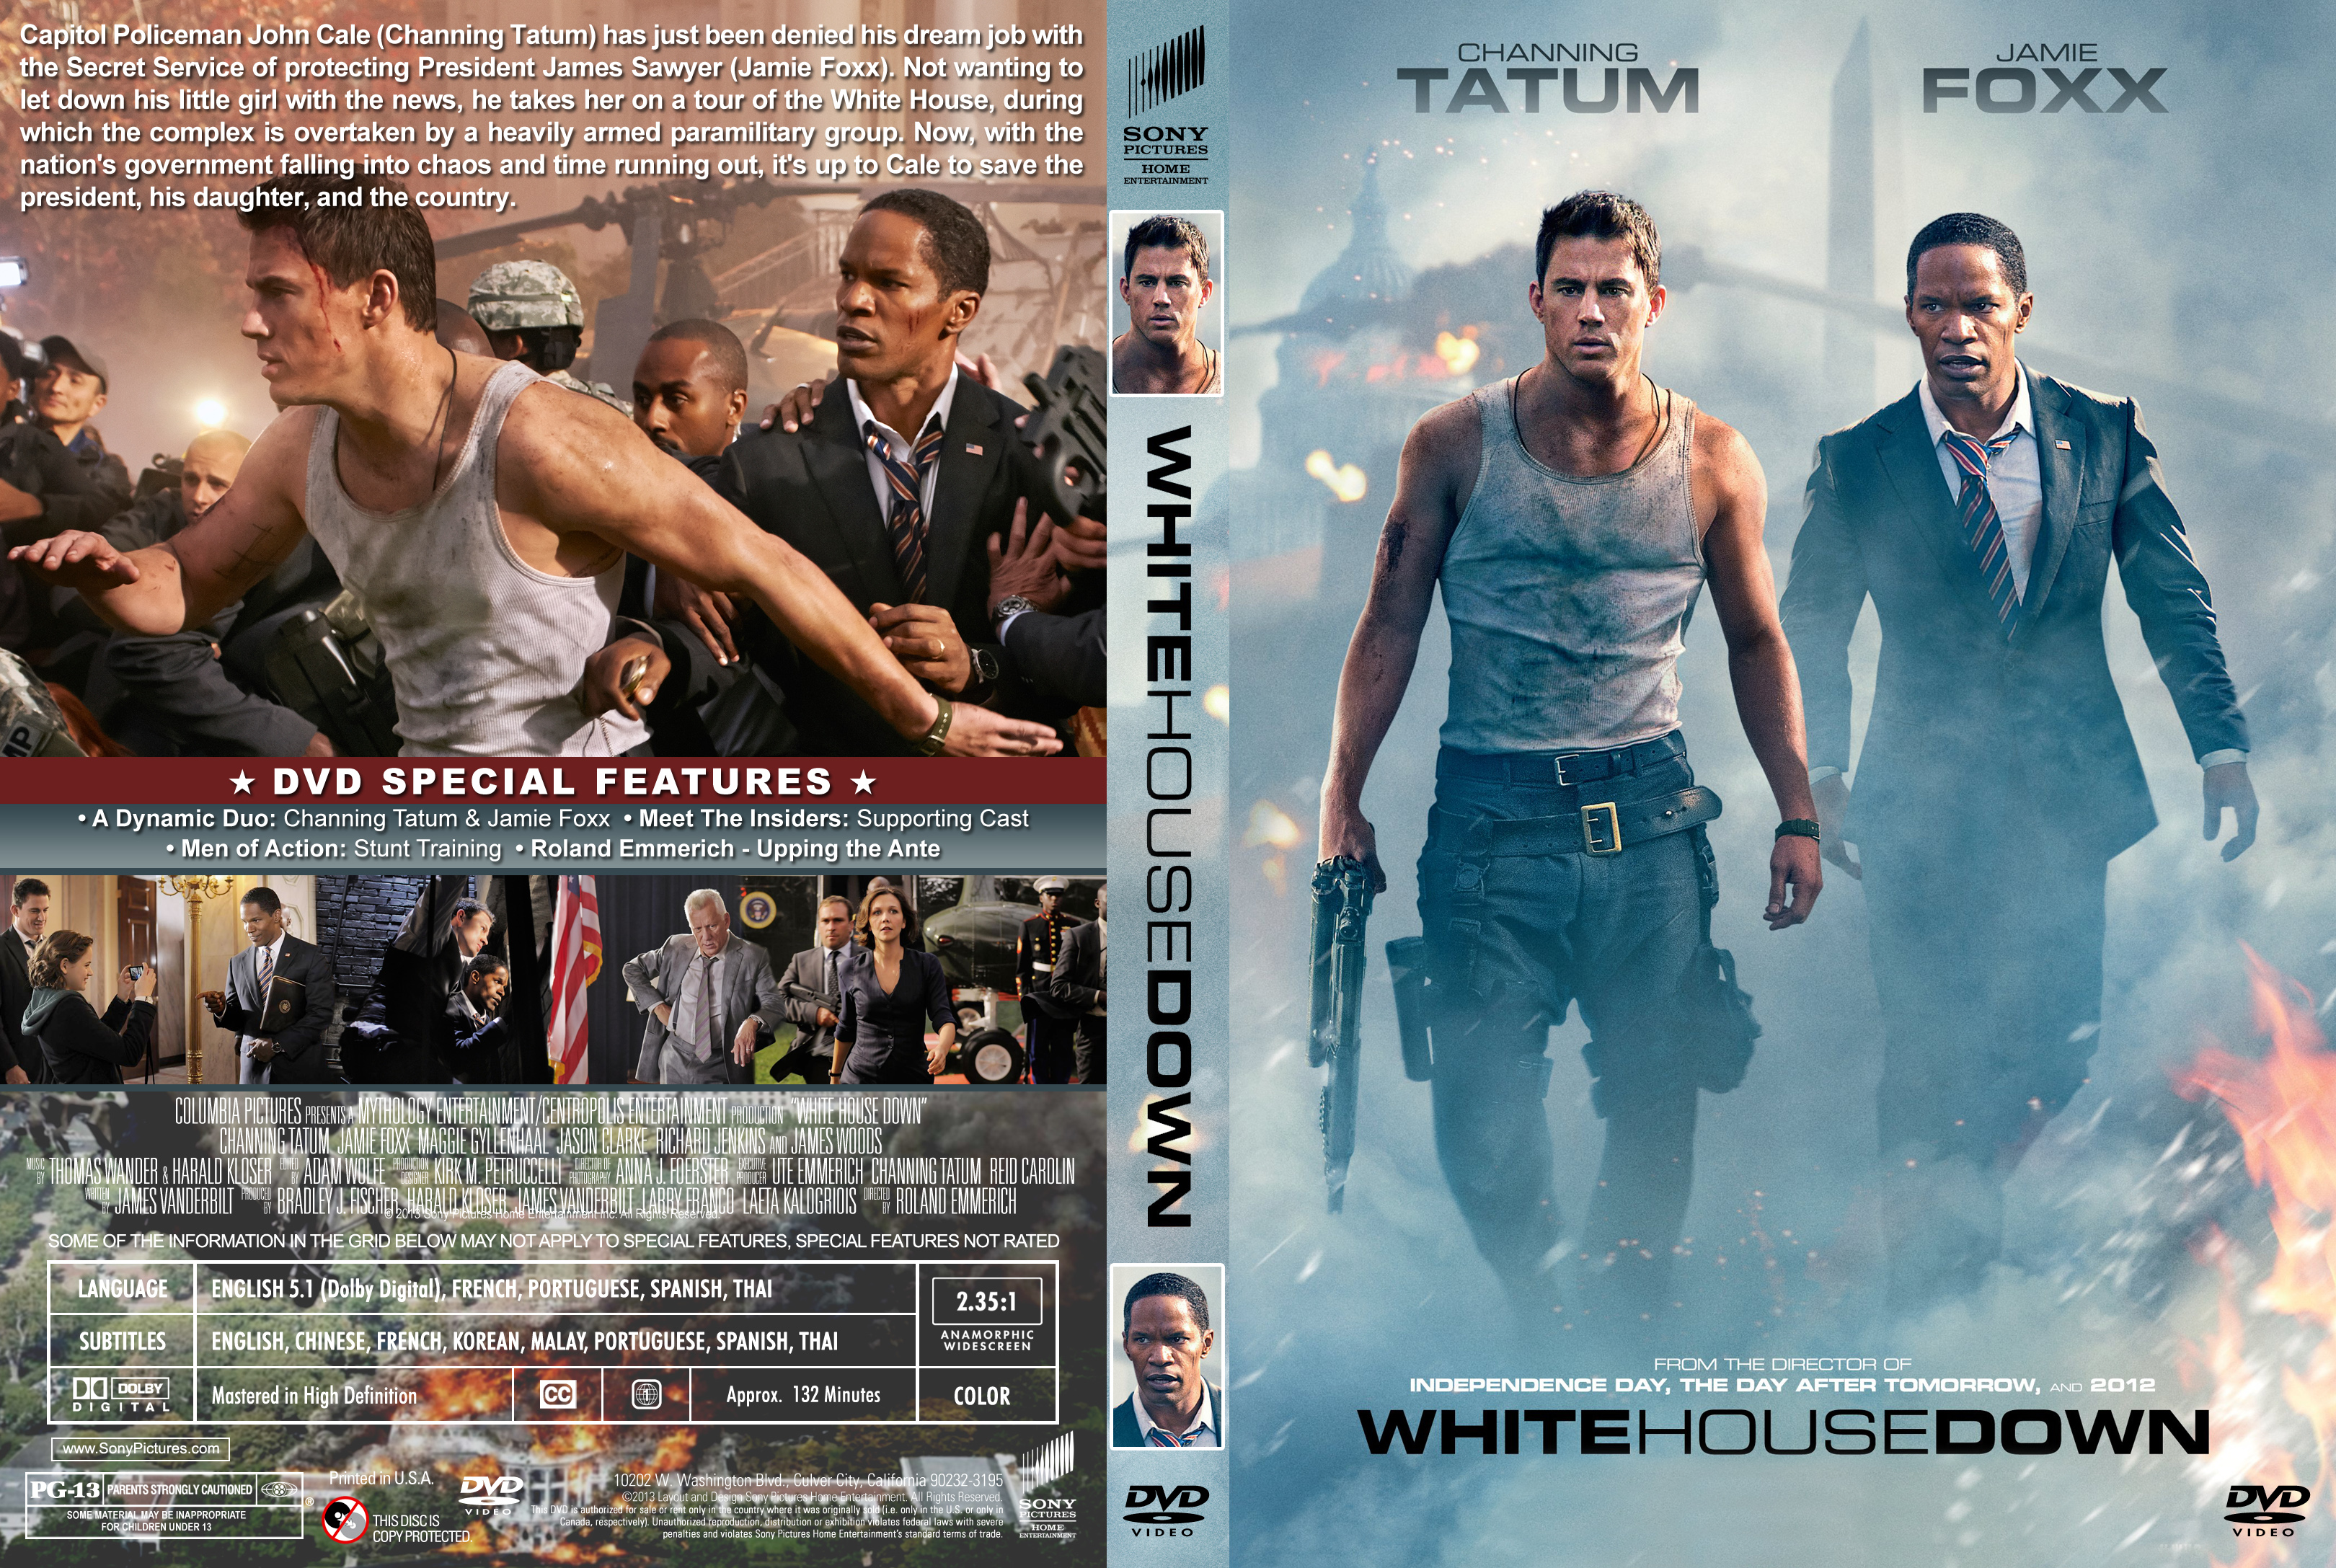 white house down movie poster